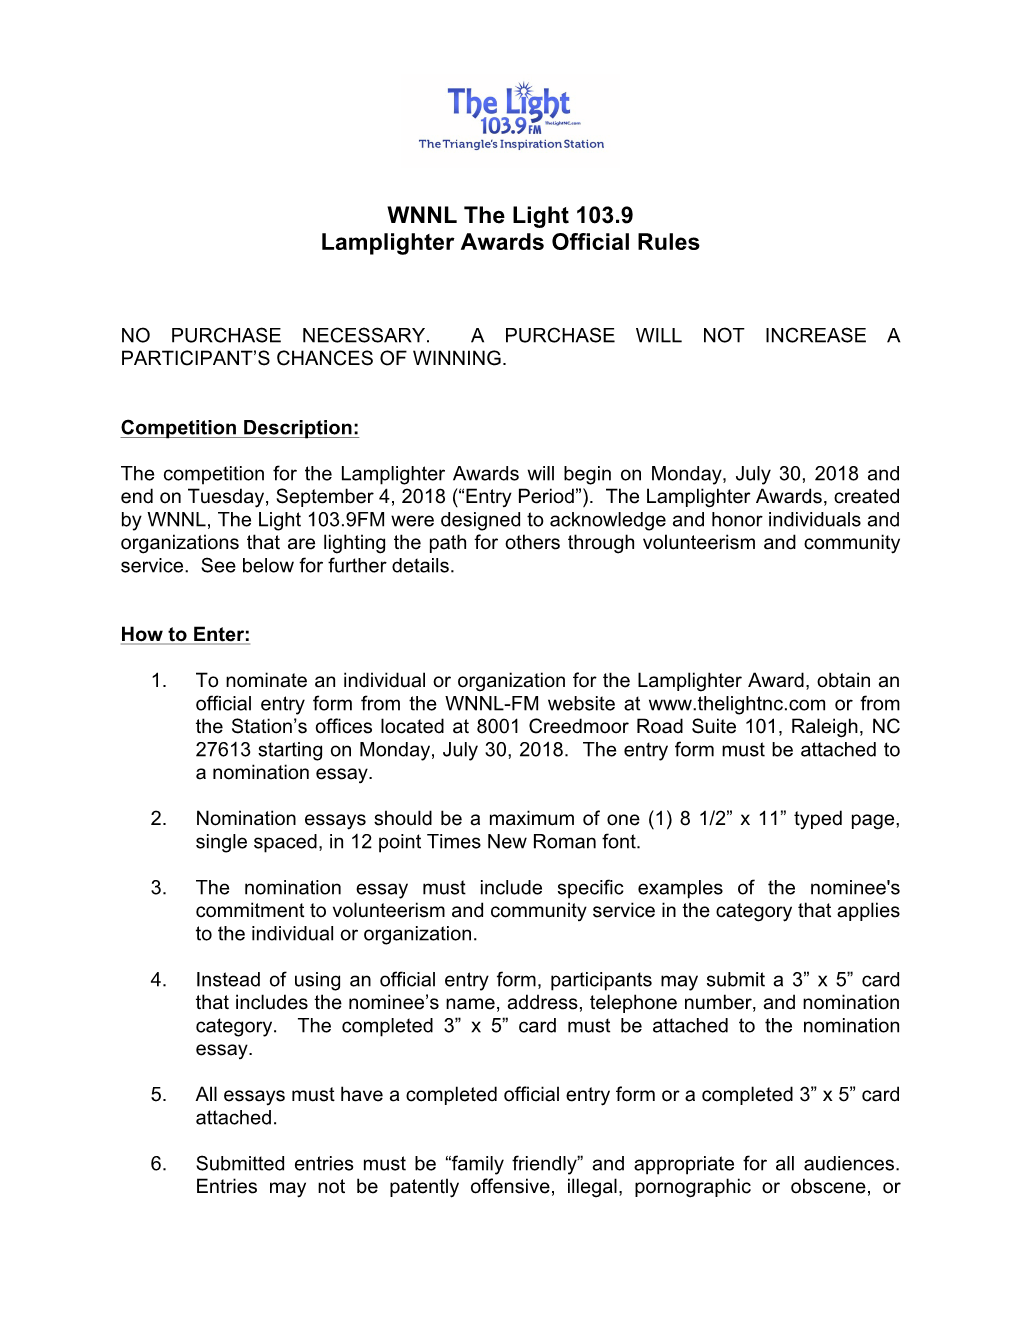 WNNL the Light 103.9 Lamplighter Awards Official Rules